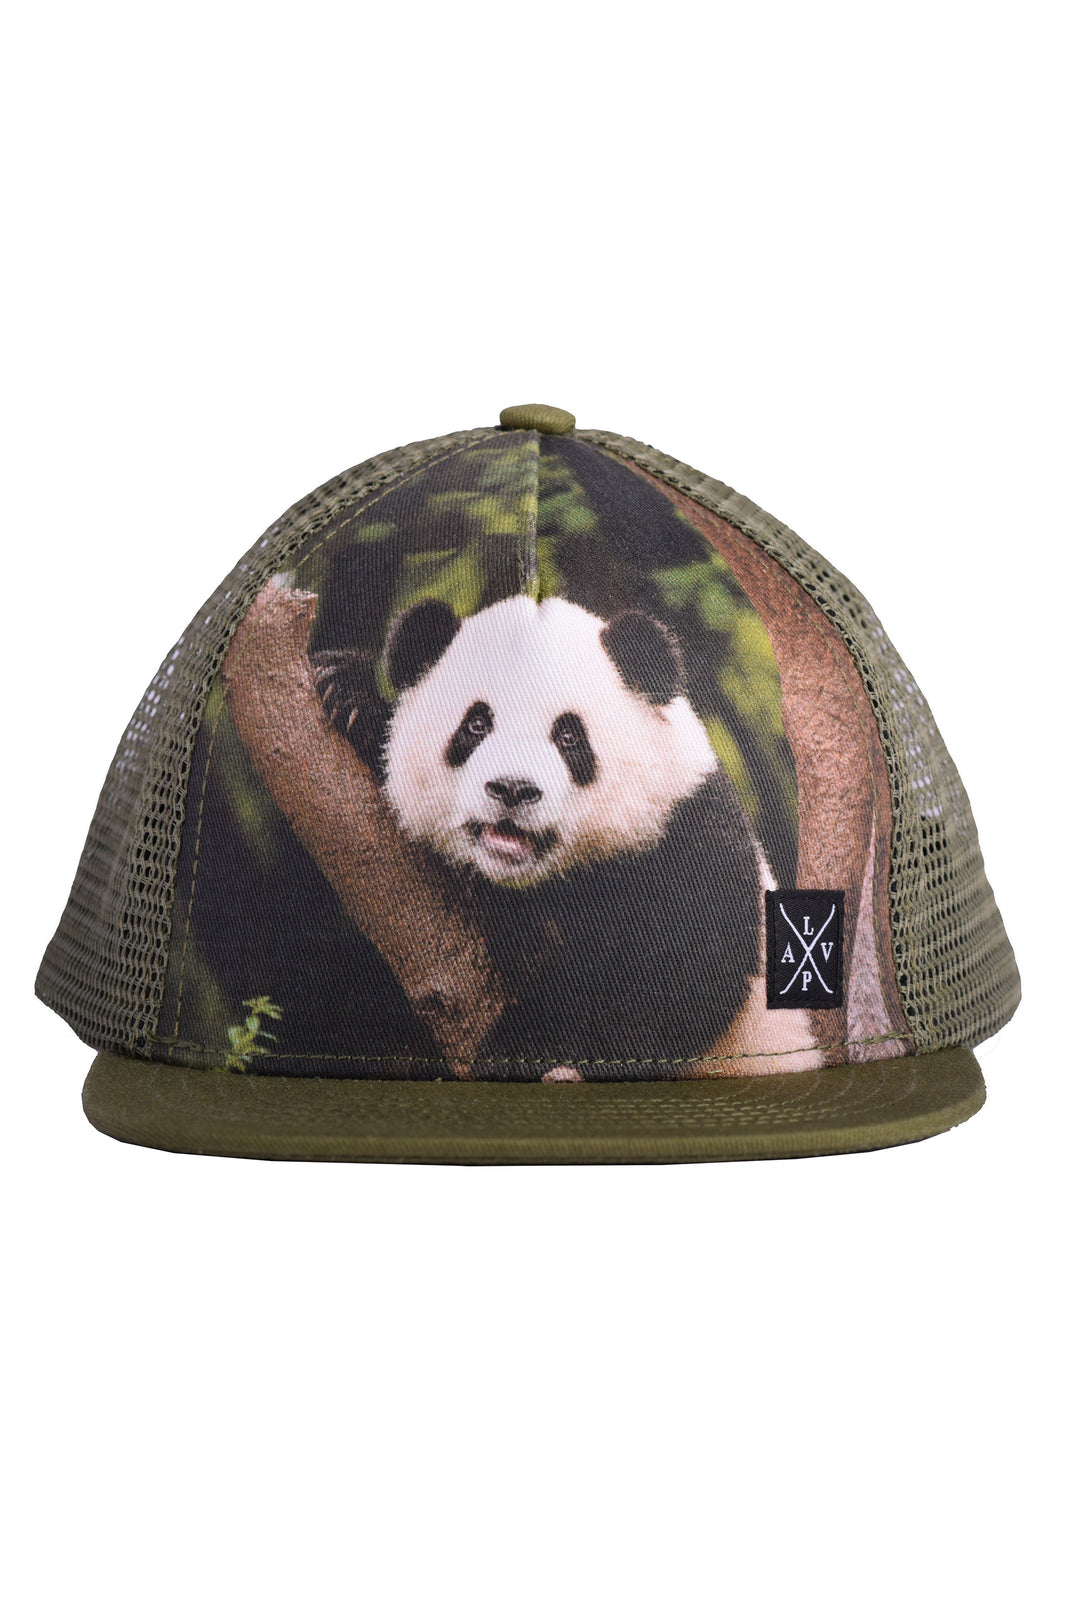 Zoo series mesh cap - Fit Simplistic [Junior]